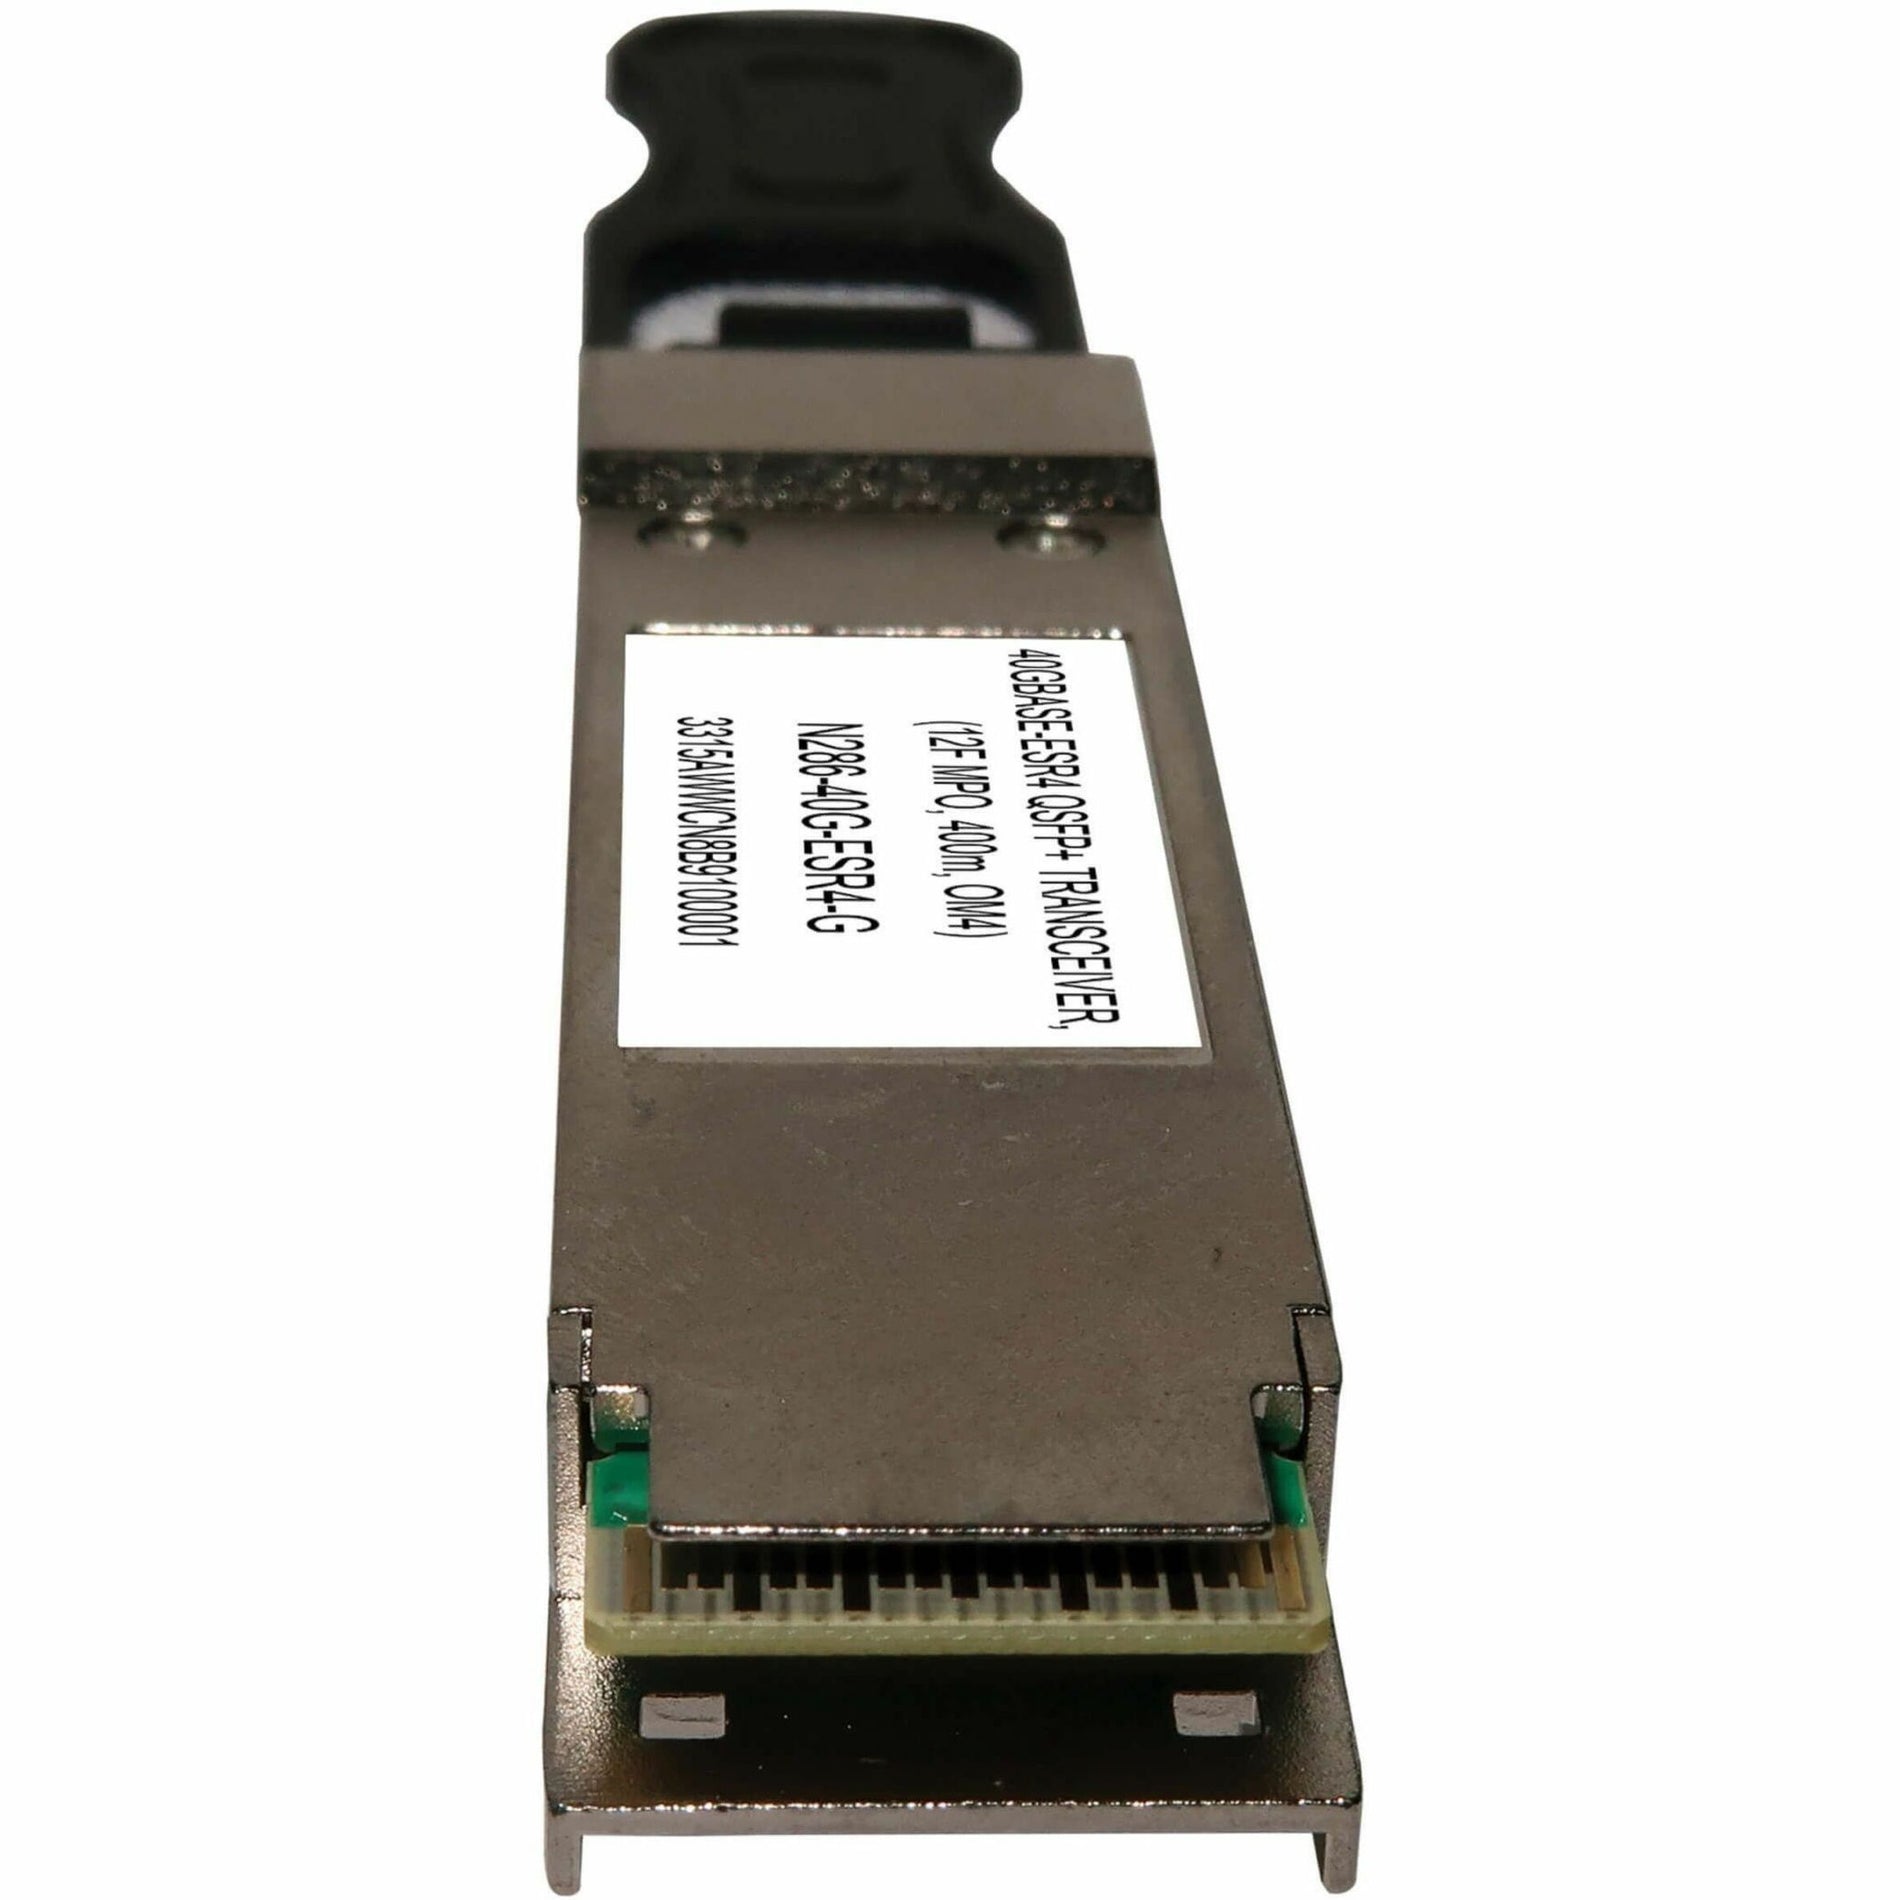 Tripp Lite N286-40G-ESR4-G QSFP+ Module, 400GBase-SR4 Network, Multi-mode, 1312.34 ft